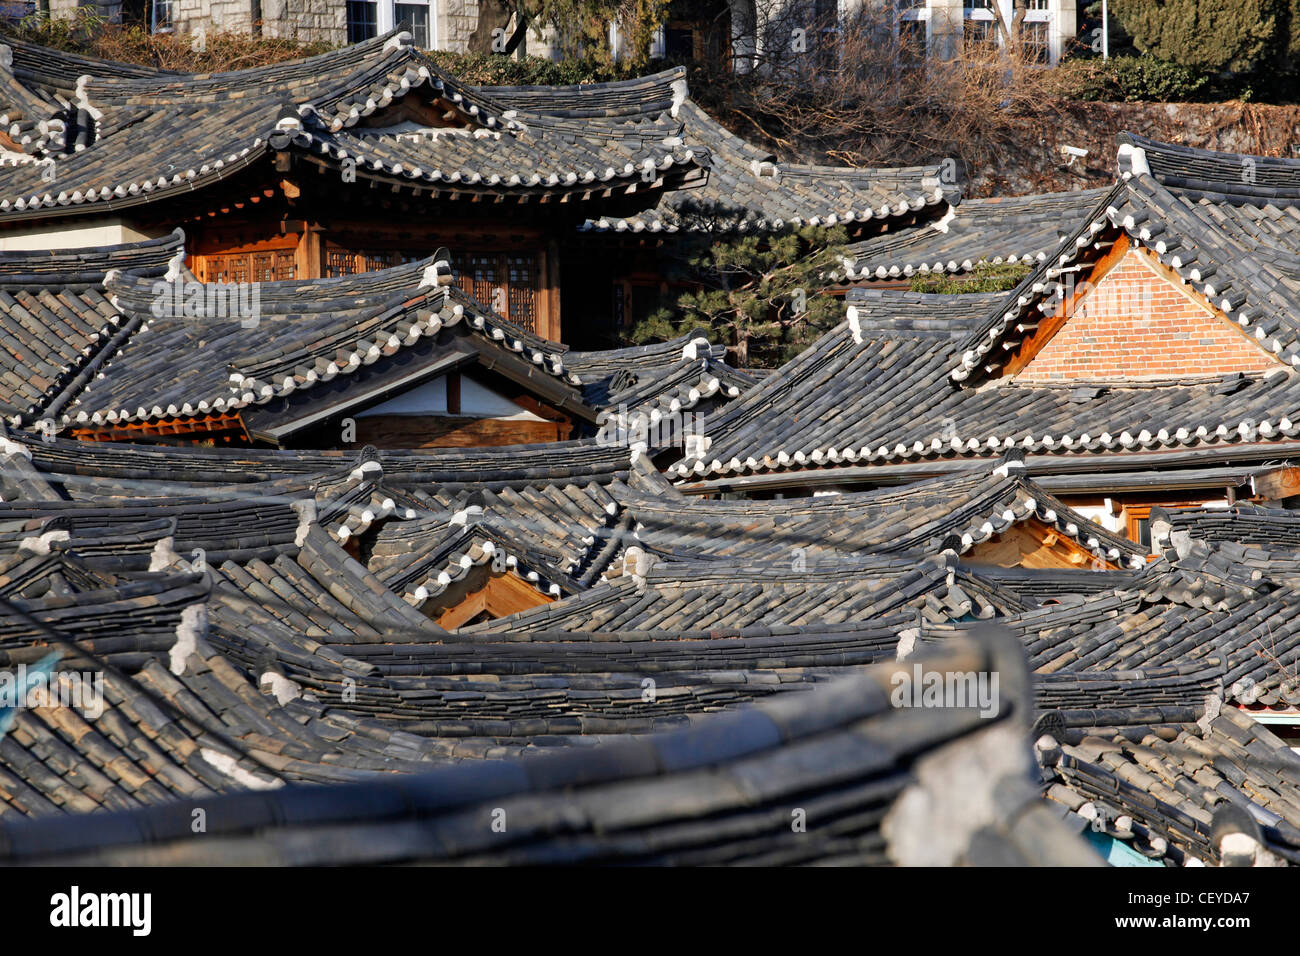 Roofs and tiles of traditonal Korean housing in the Bukchon Hanok Village in Seoul, South Korea Stock Photo